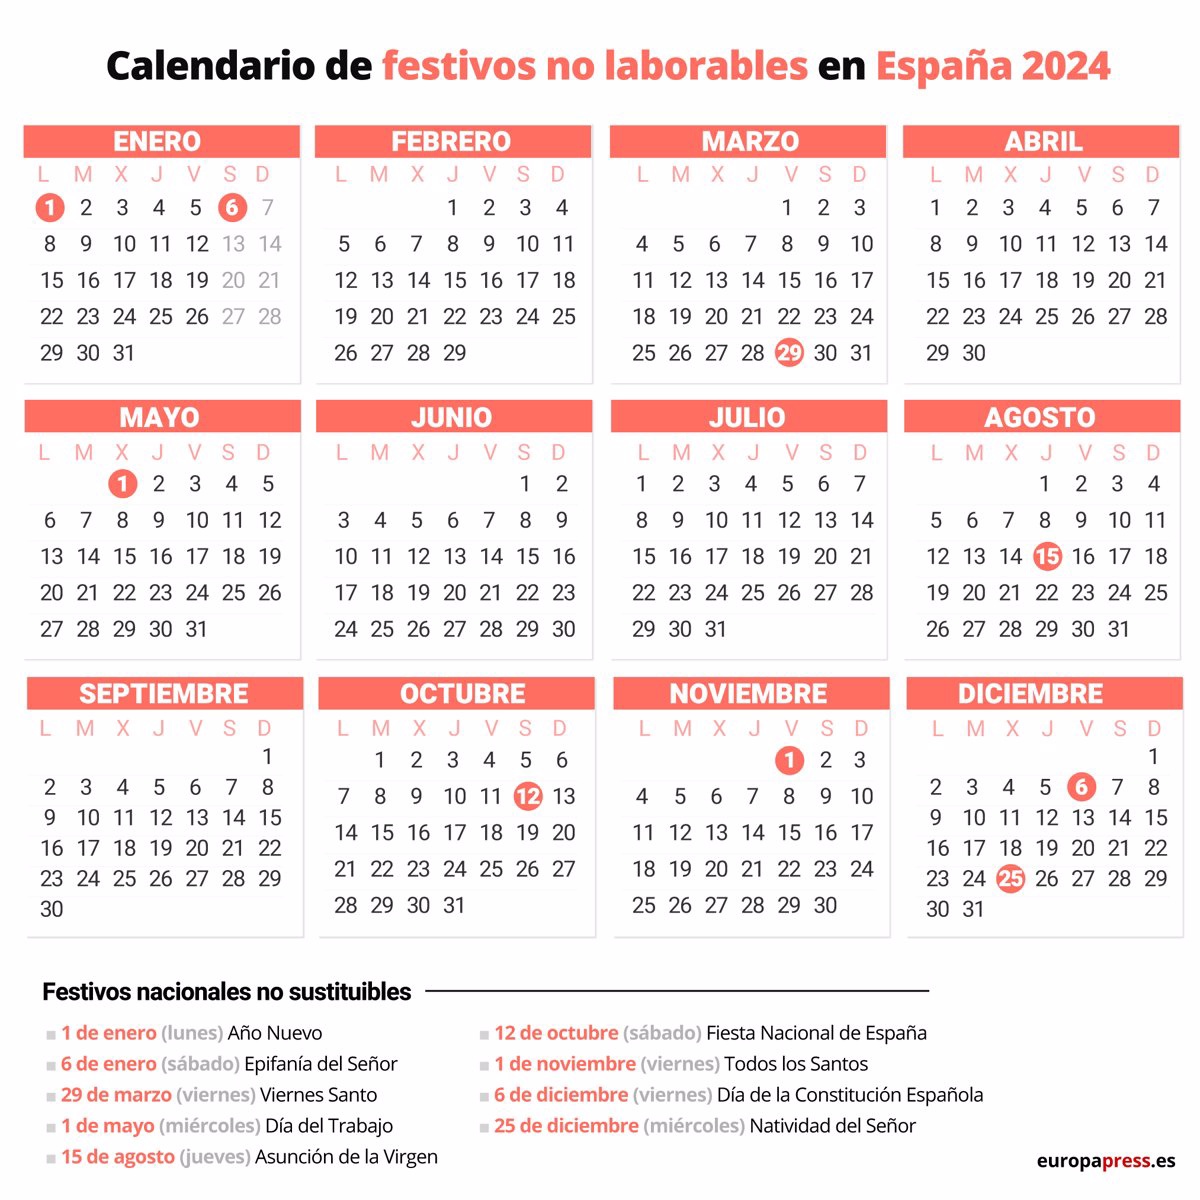 Calendario de festivos no laborables en España en 2024